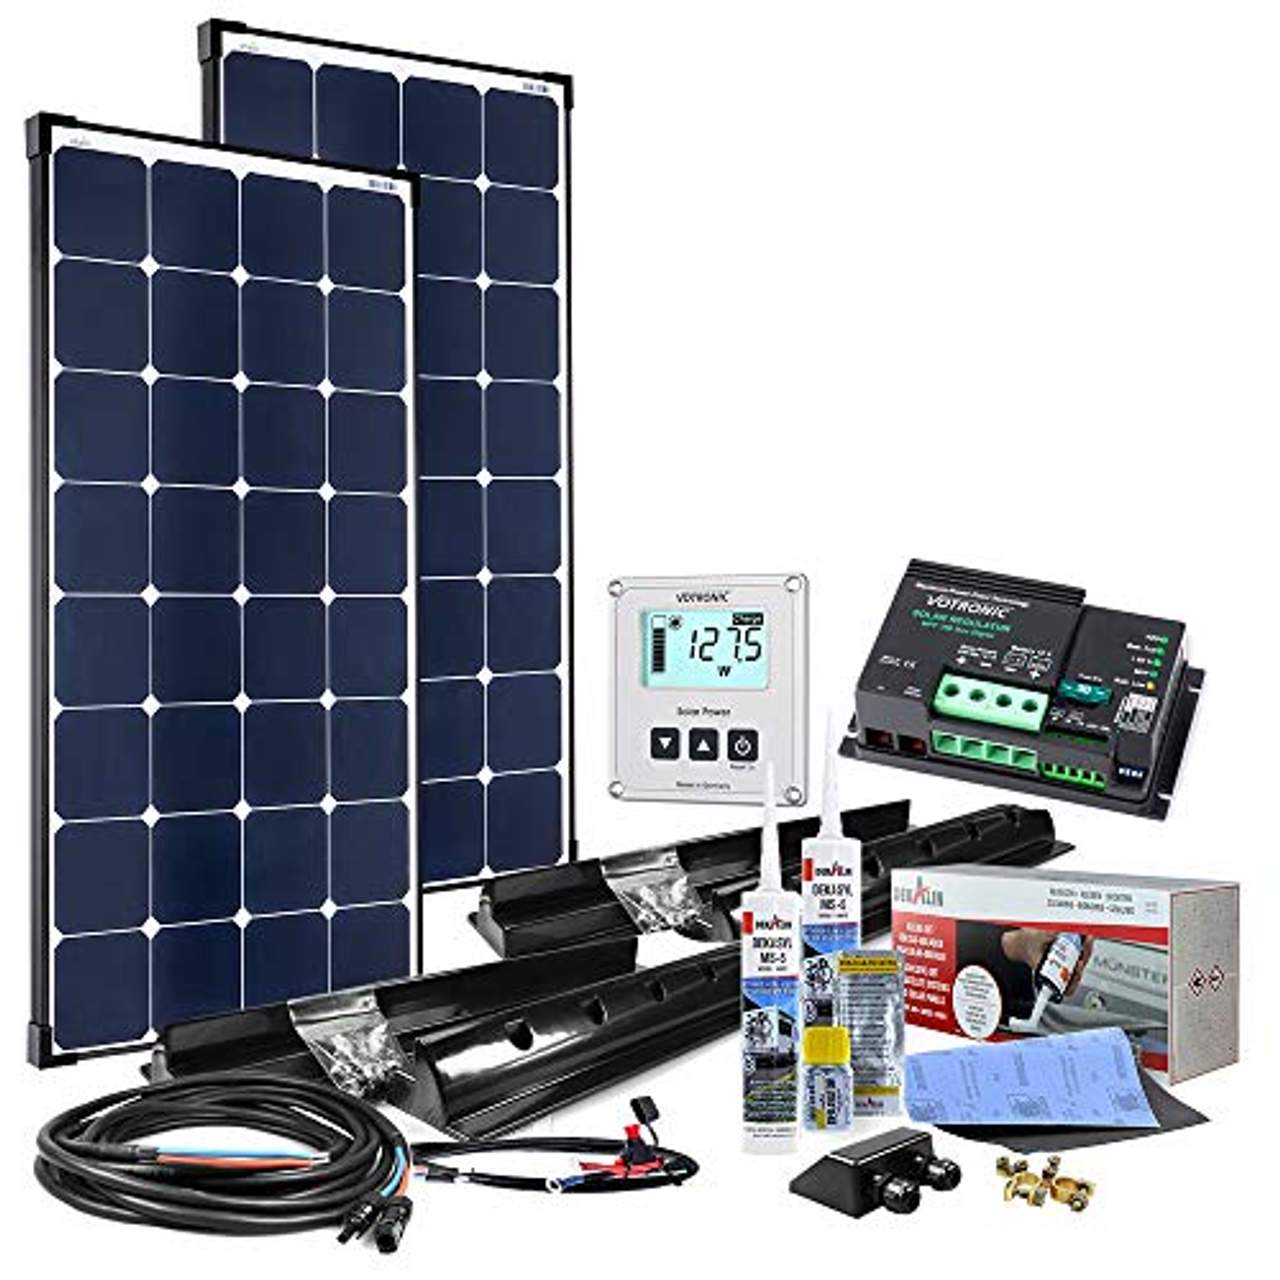 Solar Set Solarpanel Solarmodul 80W 12V Solarzelle Wohnmobil Wohnwagen 